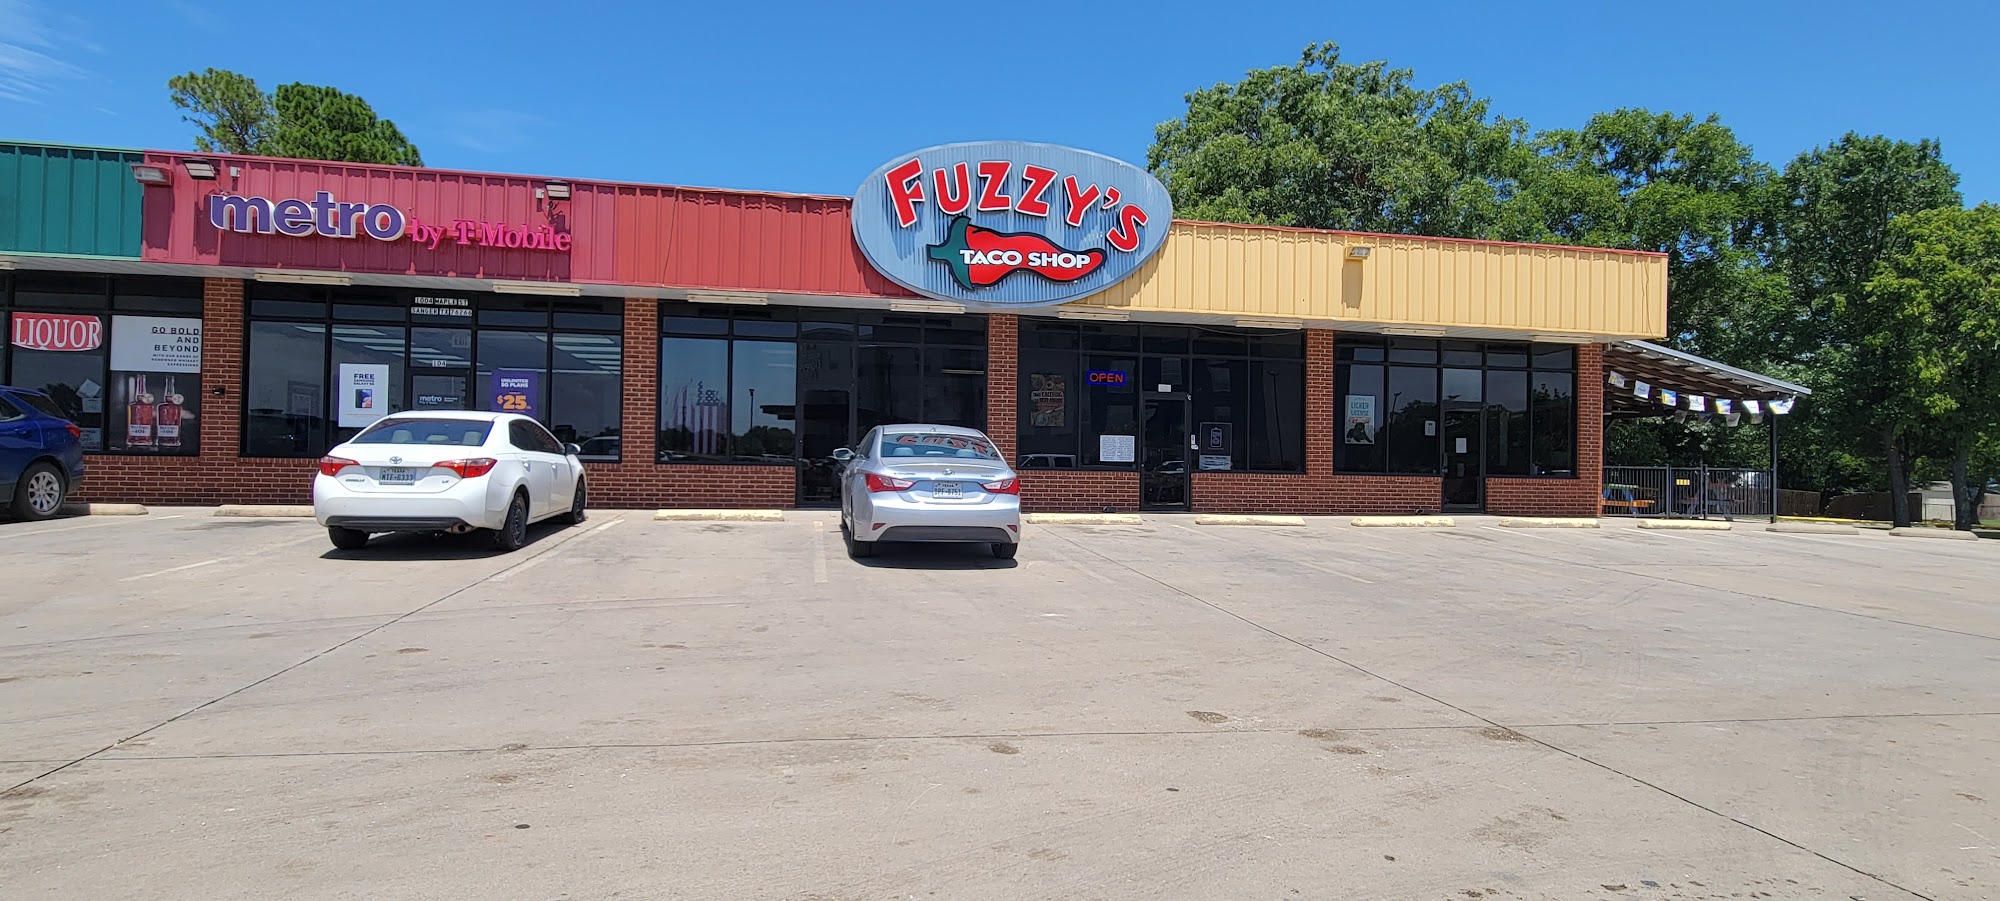 Fuzzy's Taco Shop